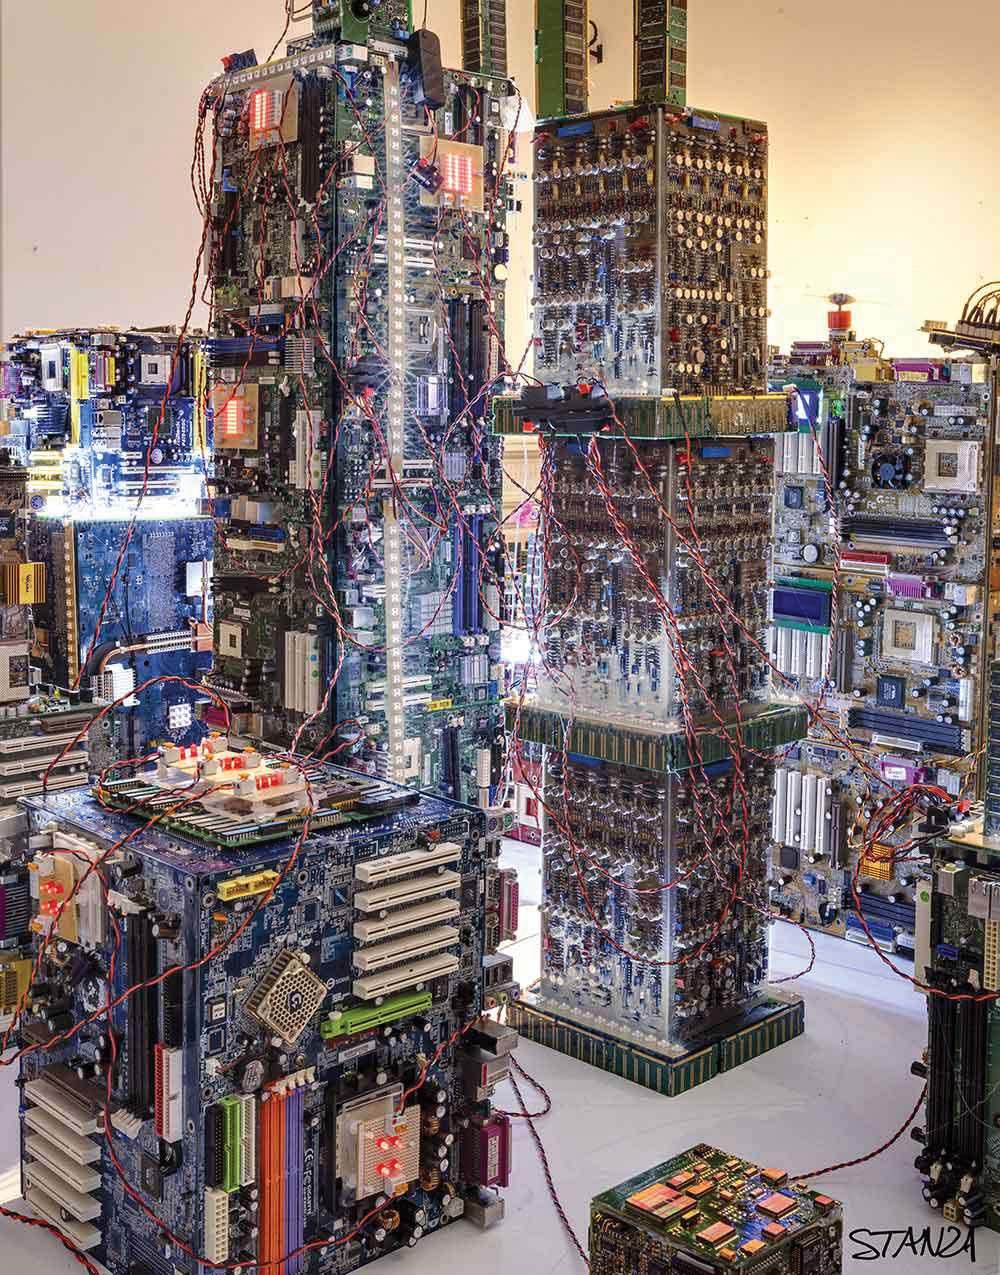 The exhibition The Nemesis Machine showcasing a cybernetic cityscape